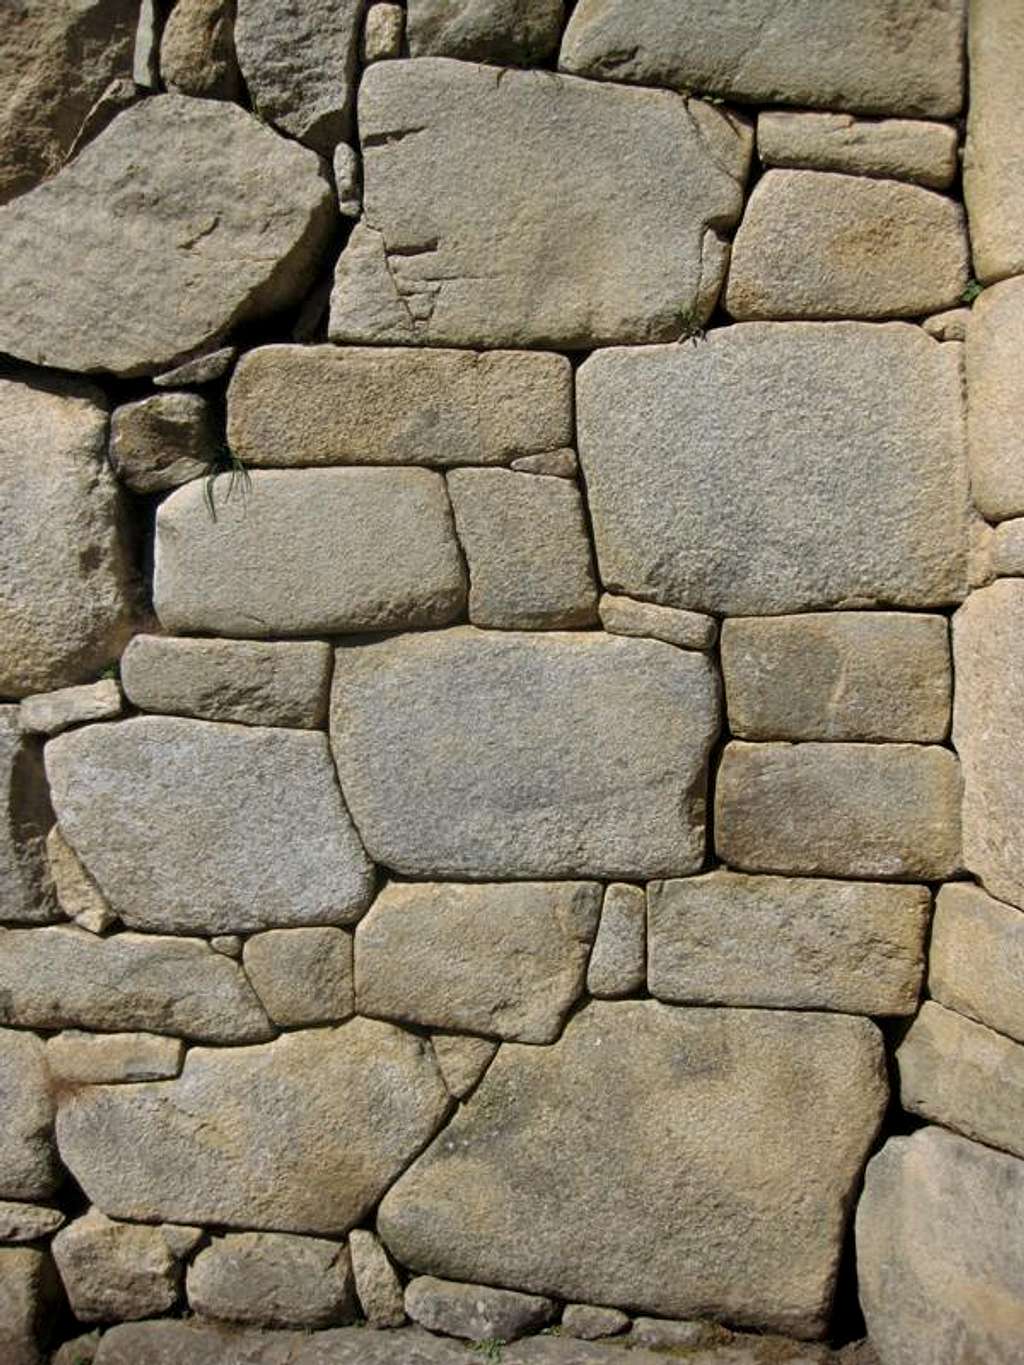 Ancient stone work at Machu Picchu